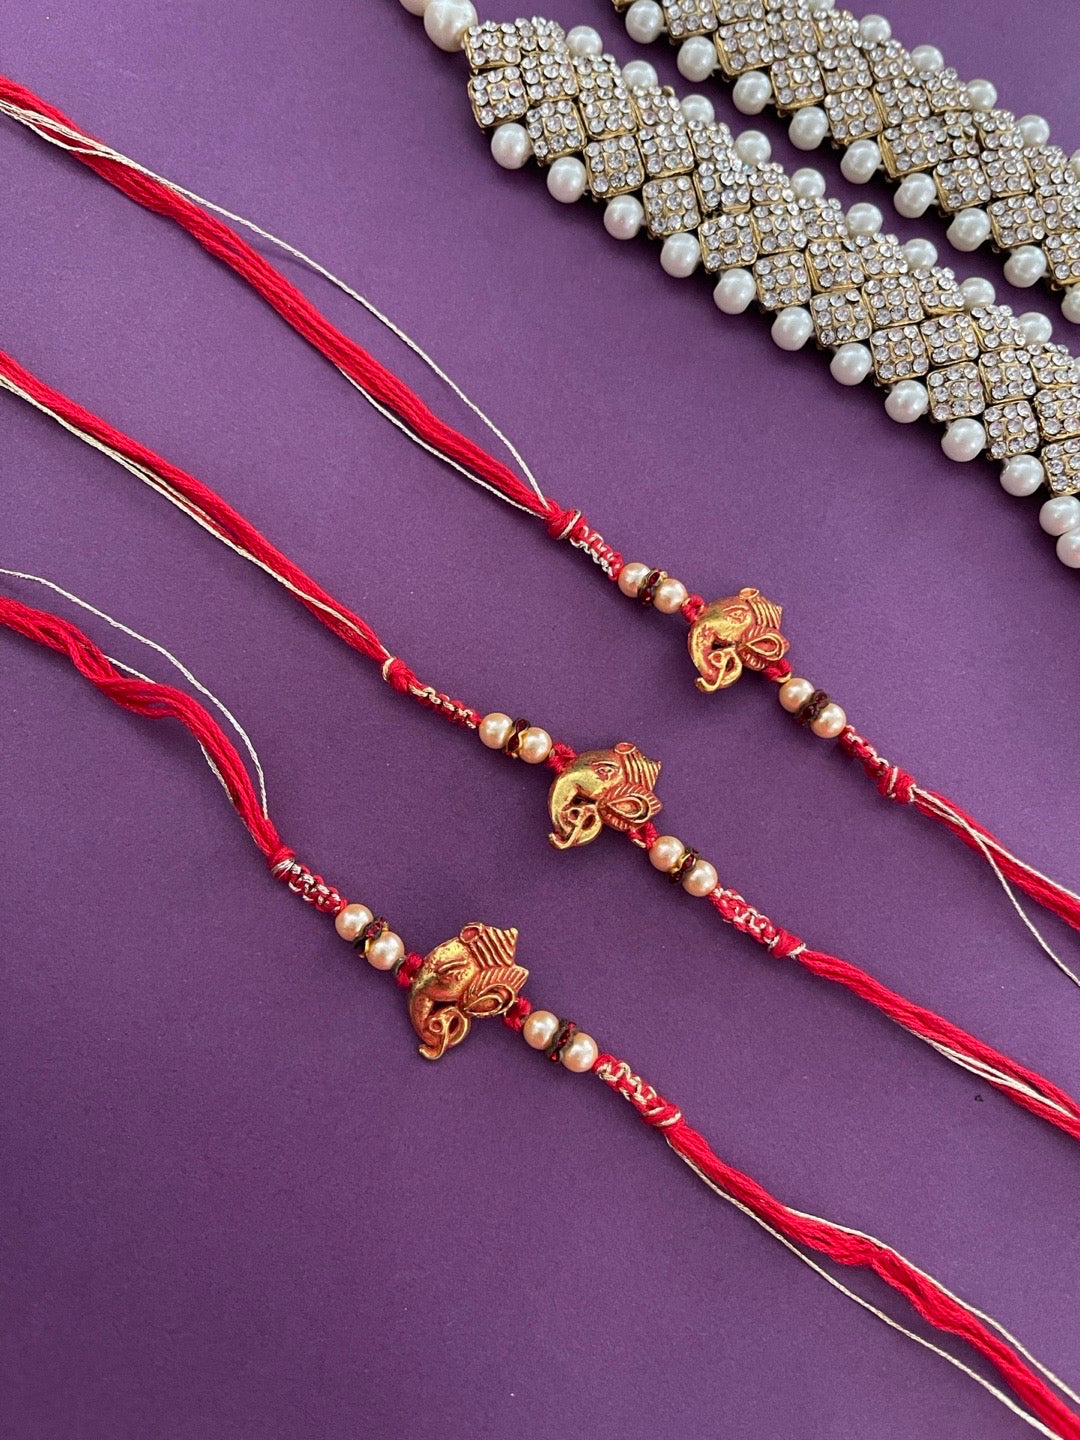 image for (Rakhi Set of 3) Latest Designer Ganesh Rakhi With Pearls Red Thread Rakhi For Rakshabandhan